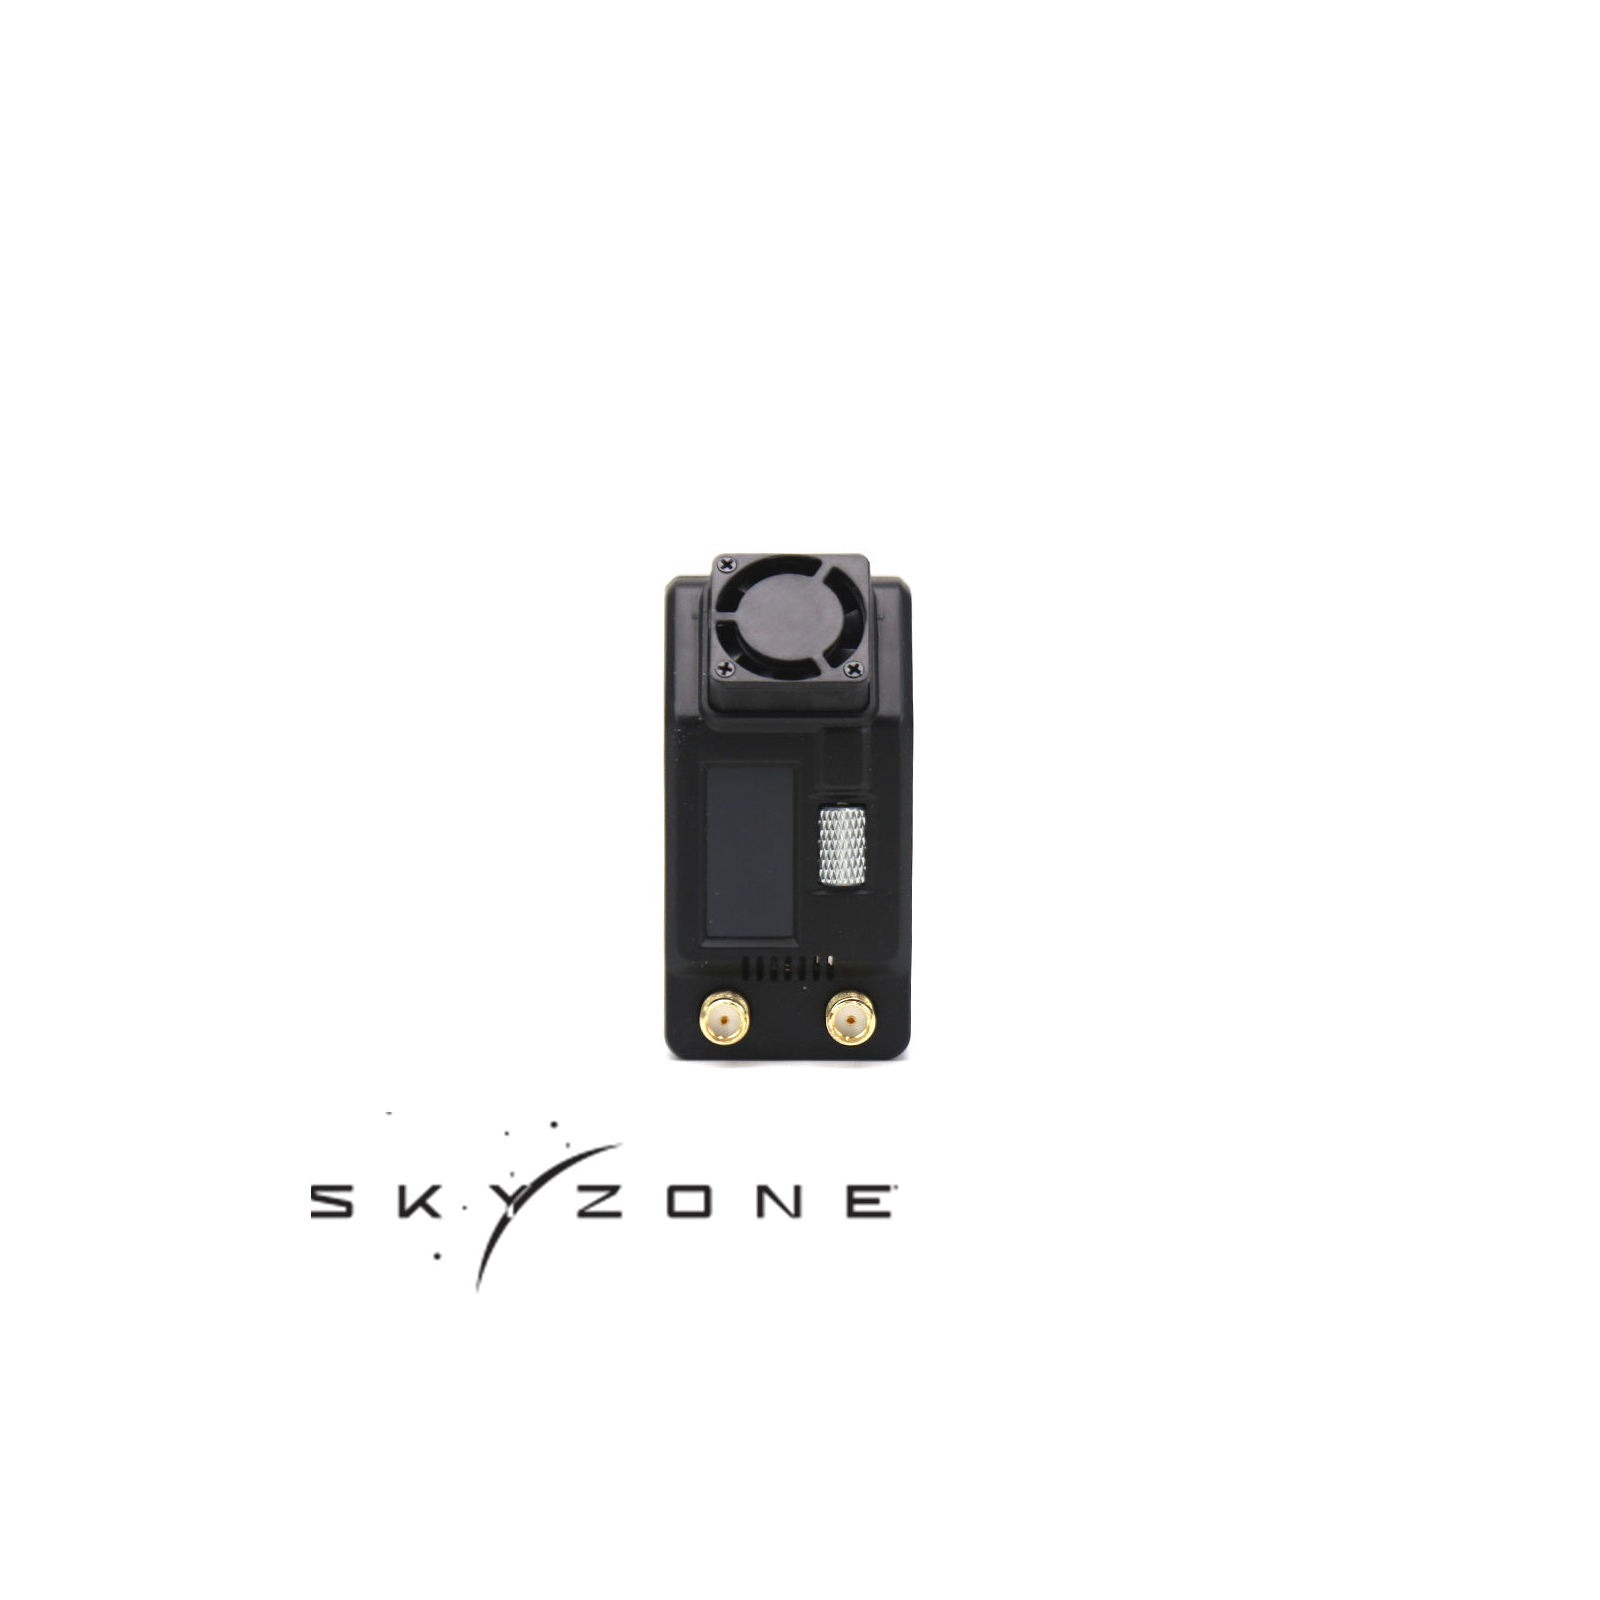 Видеоприемник (VRX) Skyzone Skyzone steadyview x receiver with IPS screen (STVX) изображение 3